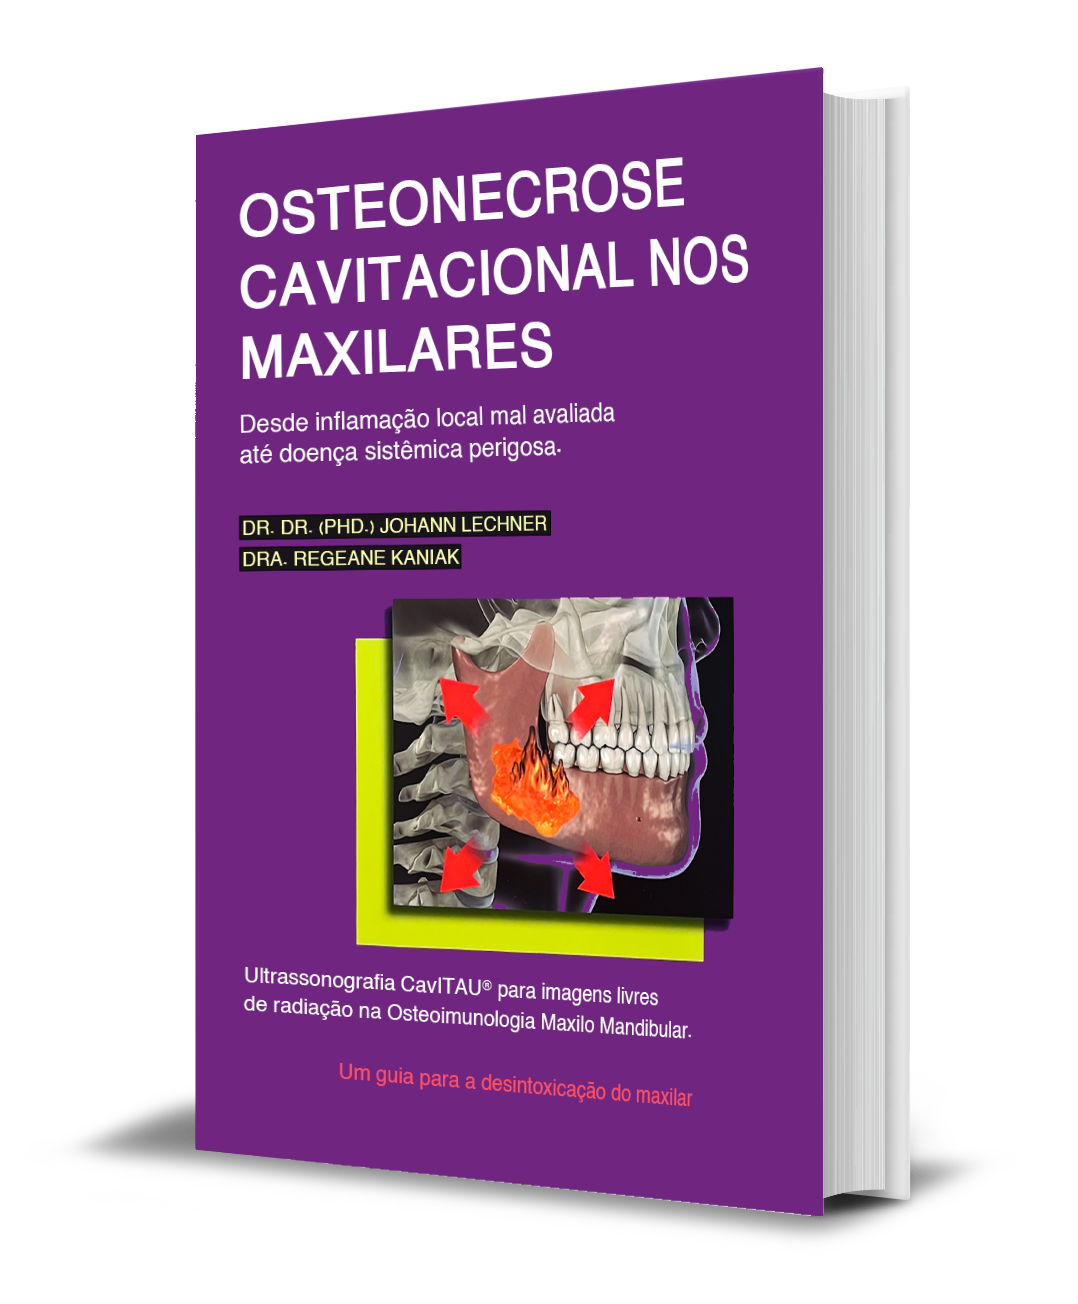 BOOK "Osteonecrose Cavitacional nos maxilares" PT